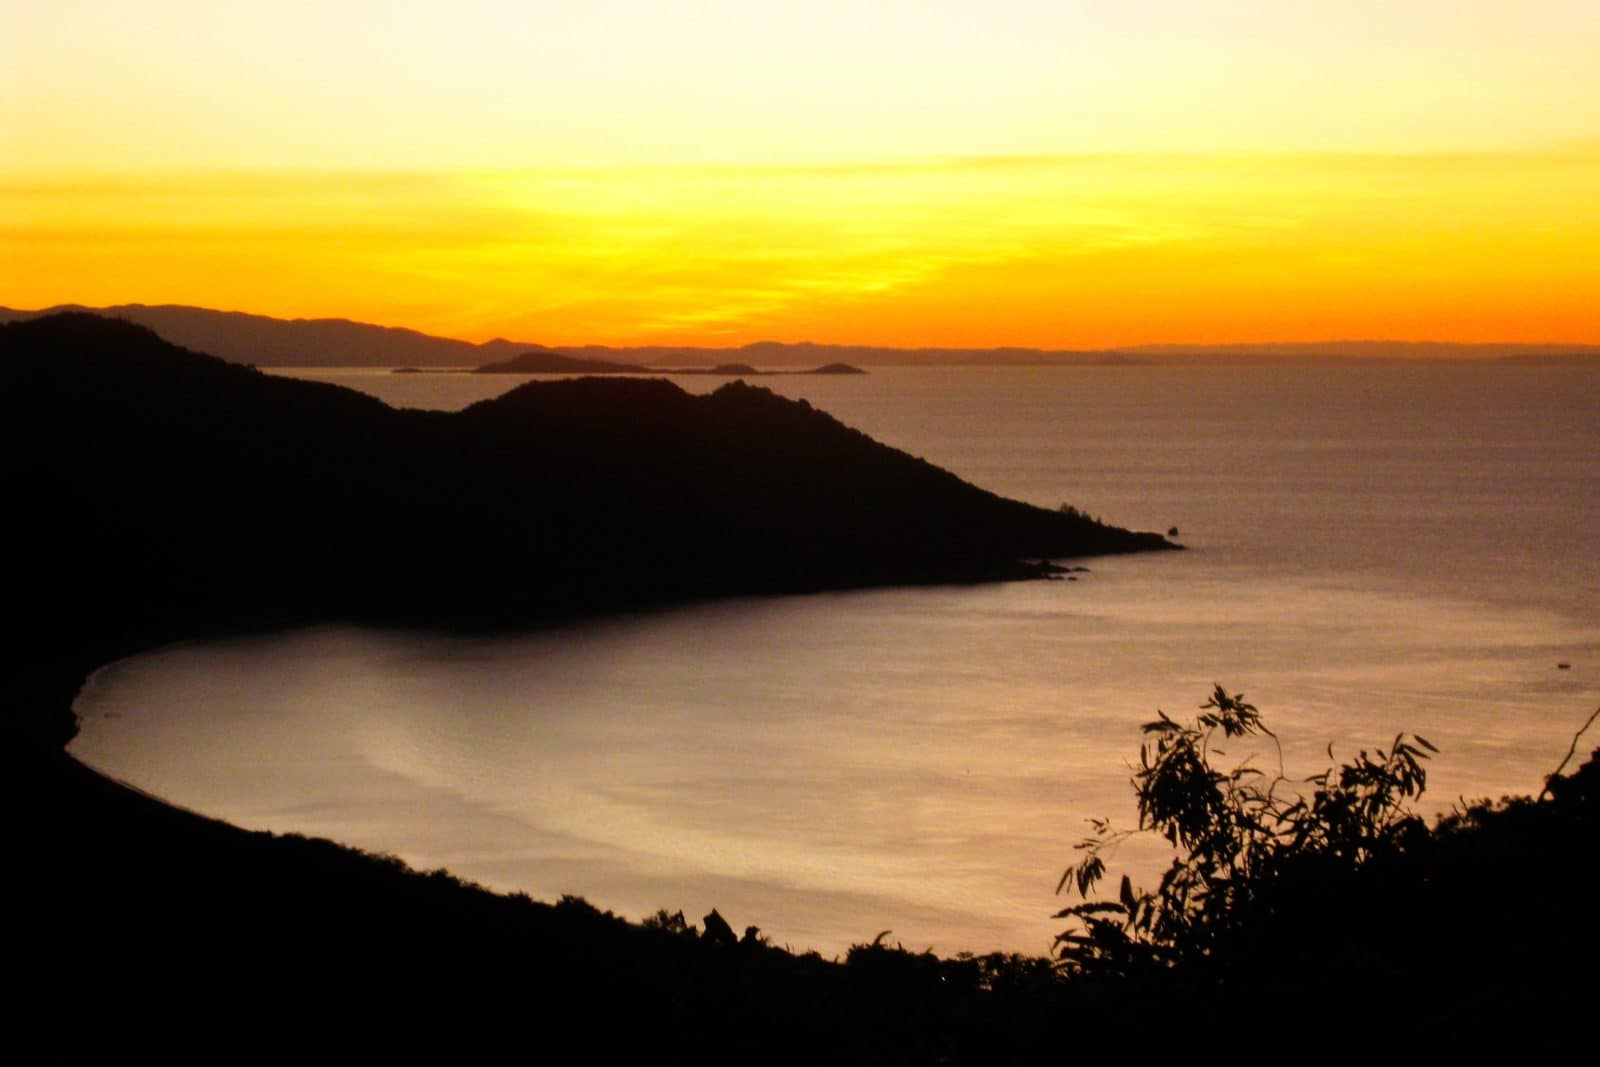 Sunset on Magnetic Island